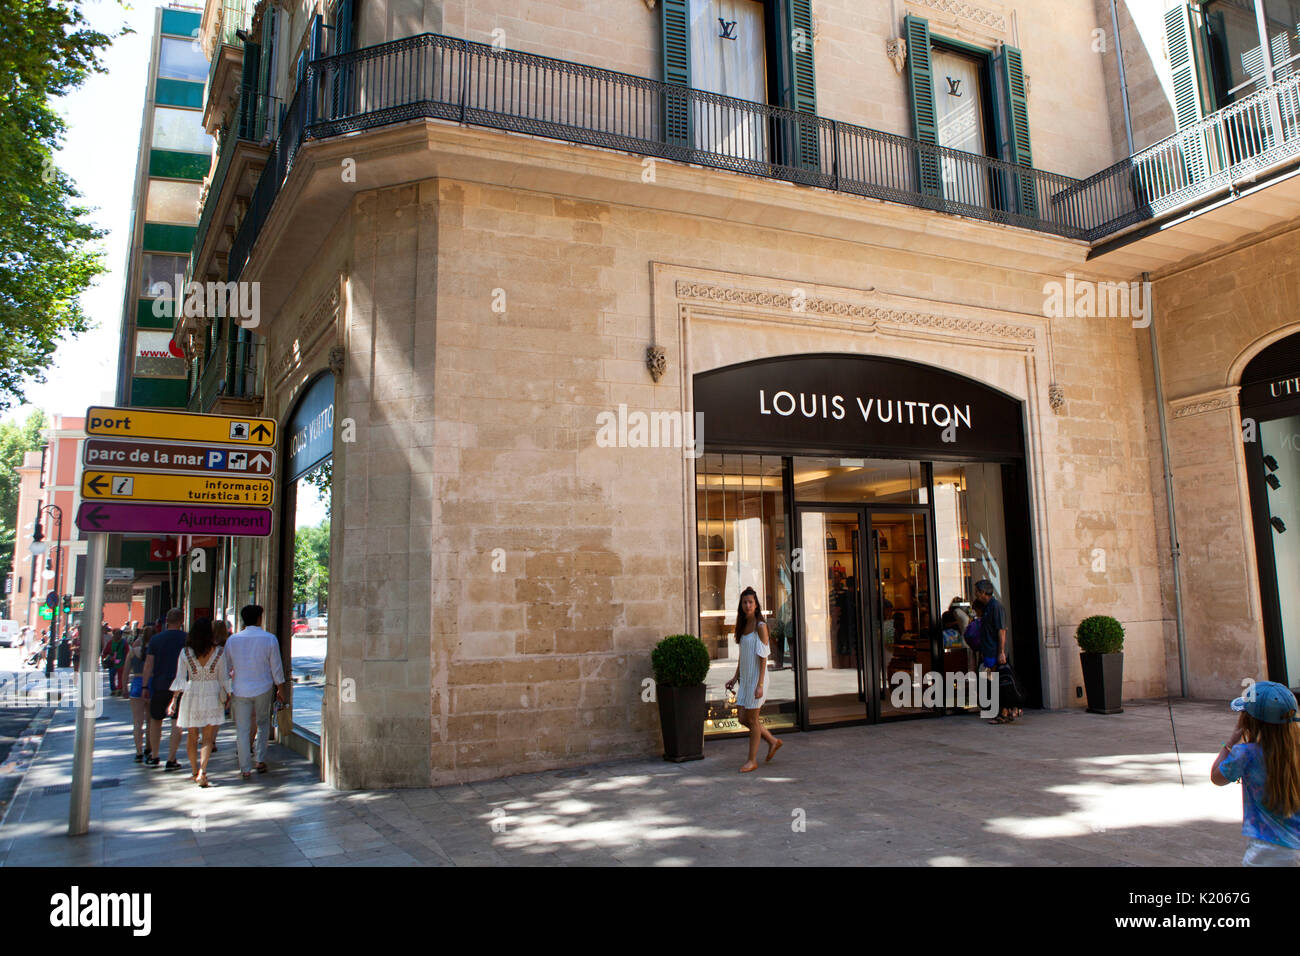 Louis Vuitton store at Palma de Mallorca resort city capital of the Spanish island of Mallorca (Majorca), the western Mediterranean Spain Stock Photo - Alamy